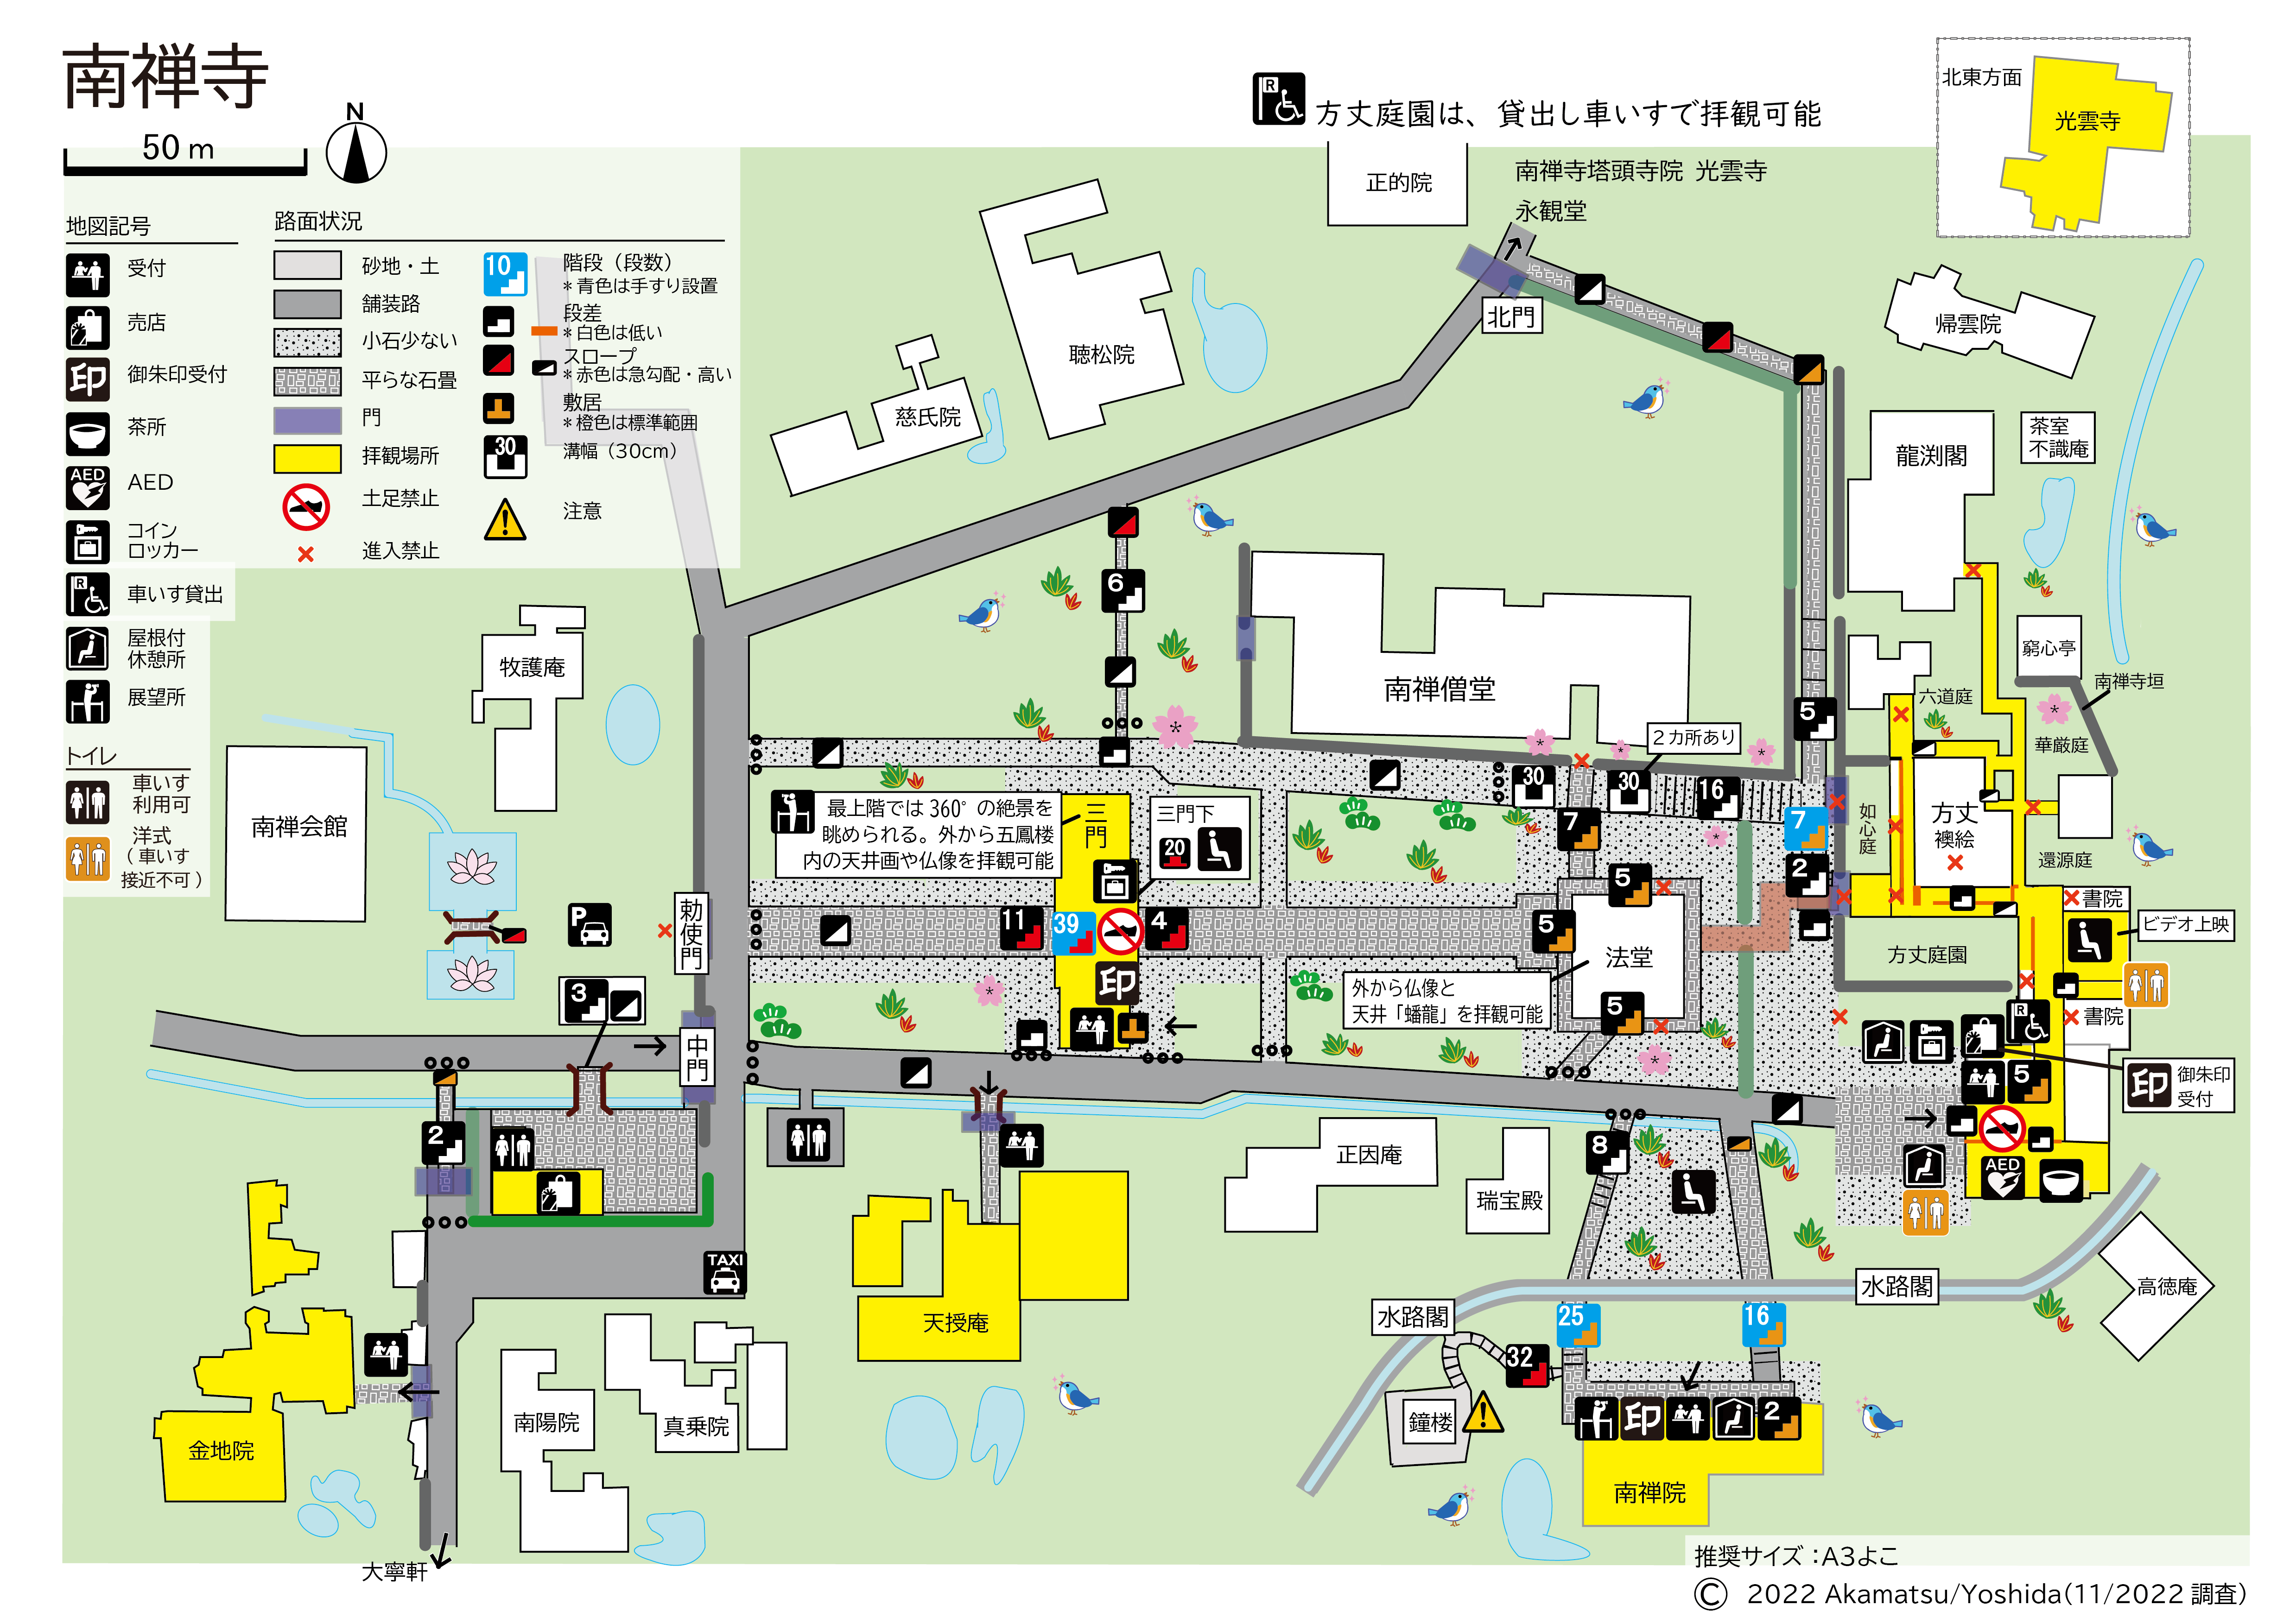 New南禅寺地図サイト変更用20221107基本地図.png